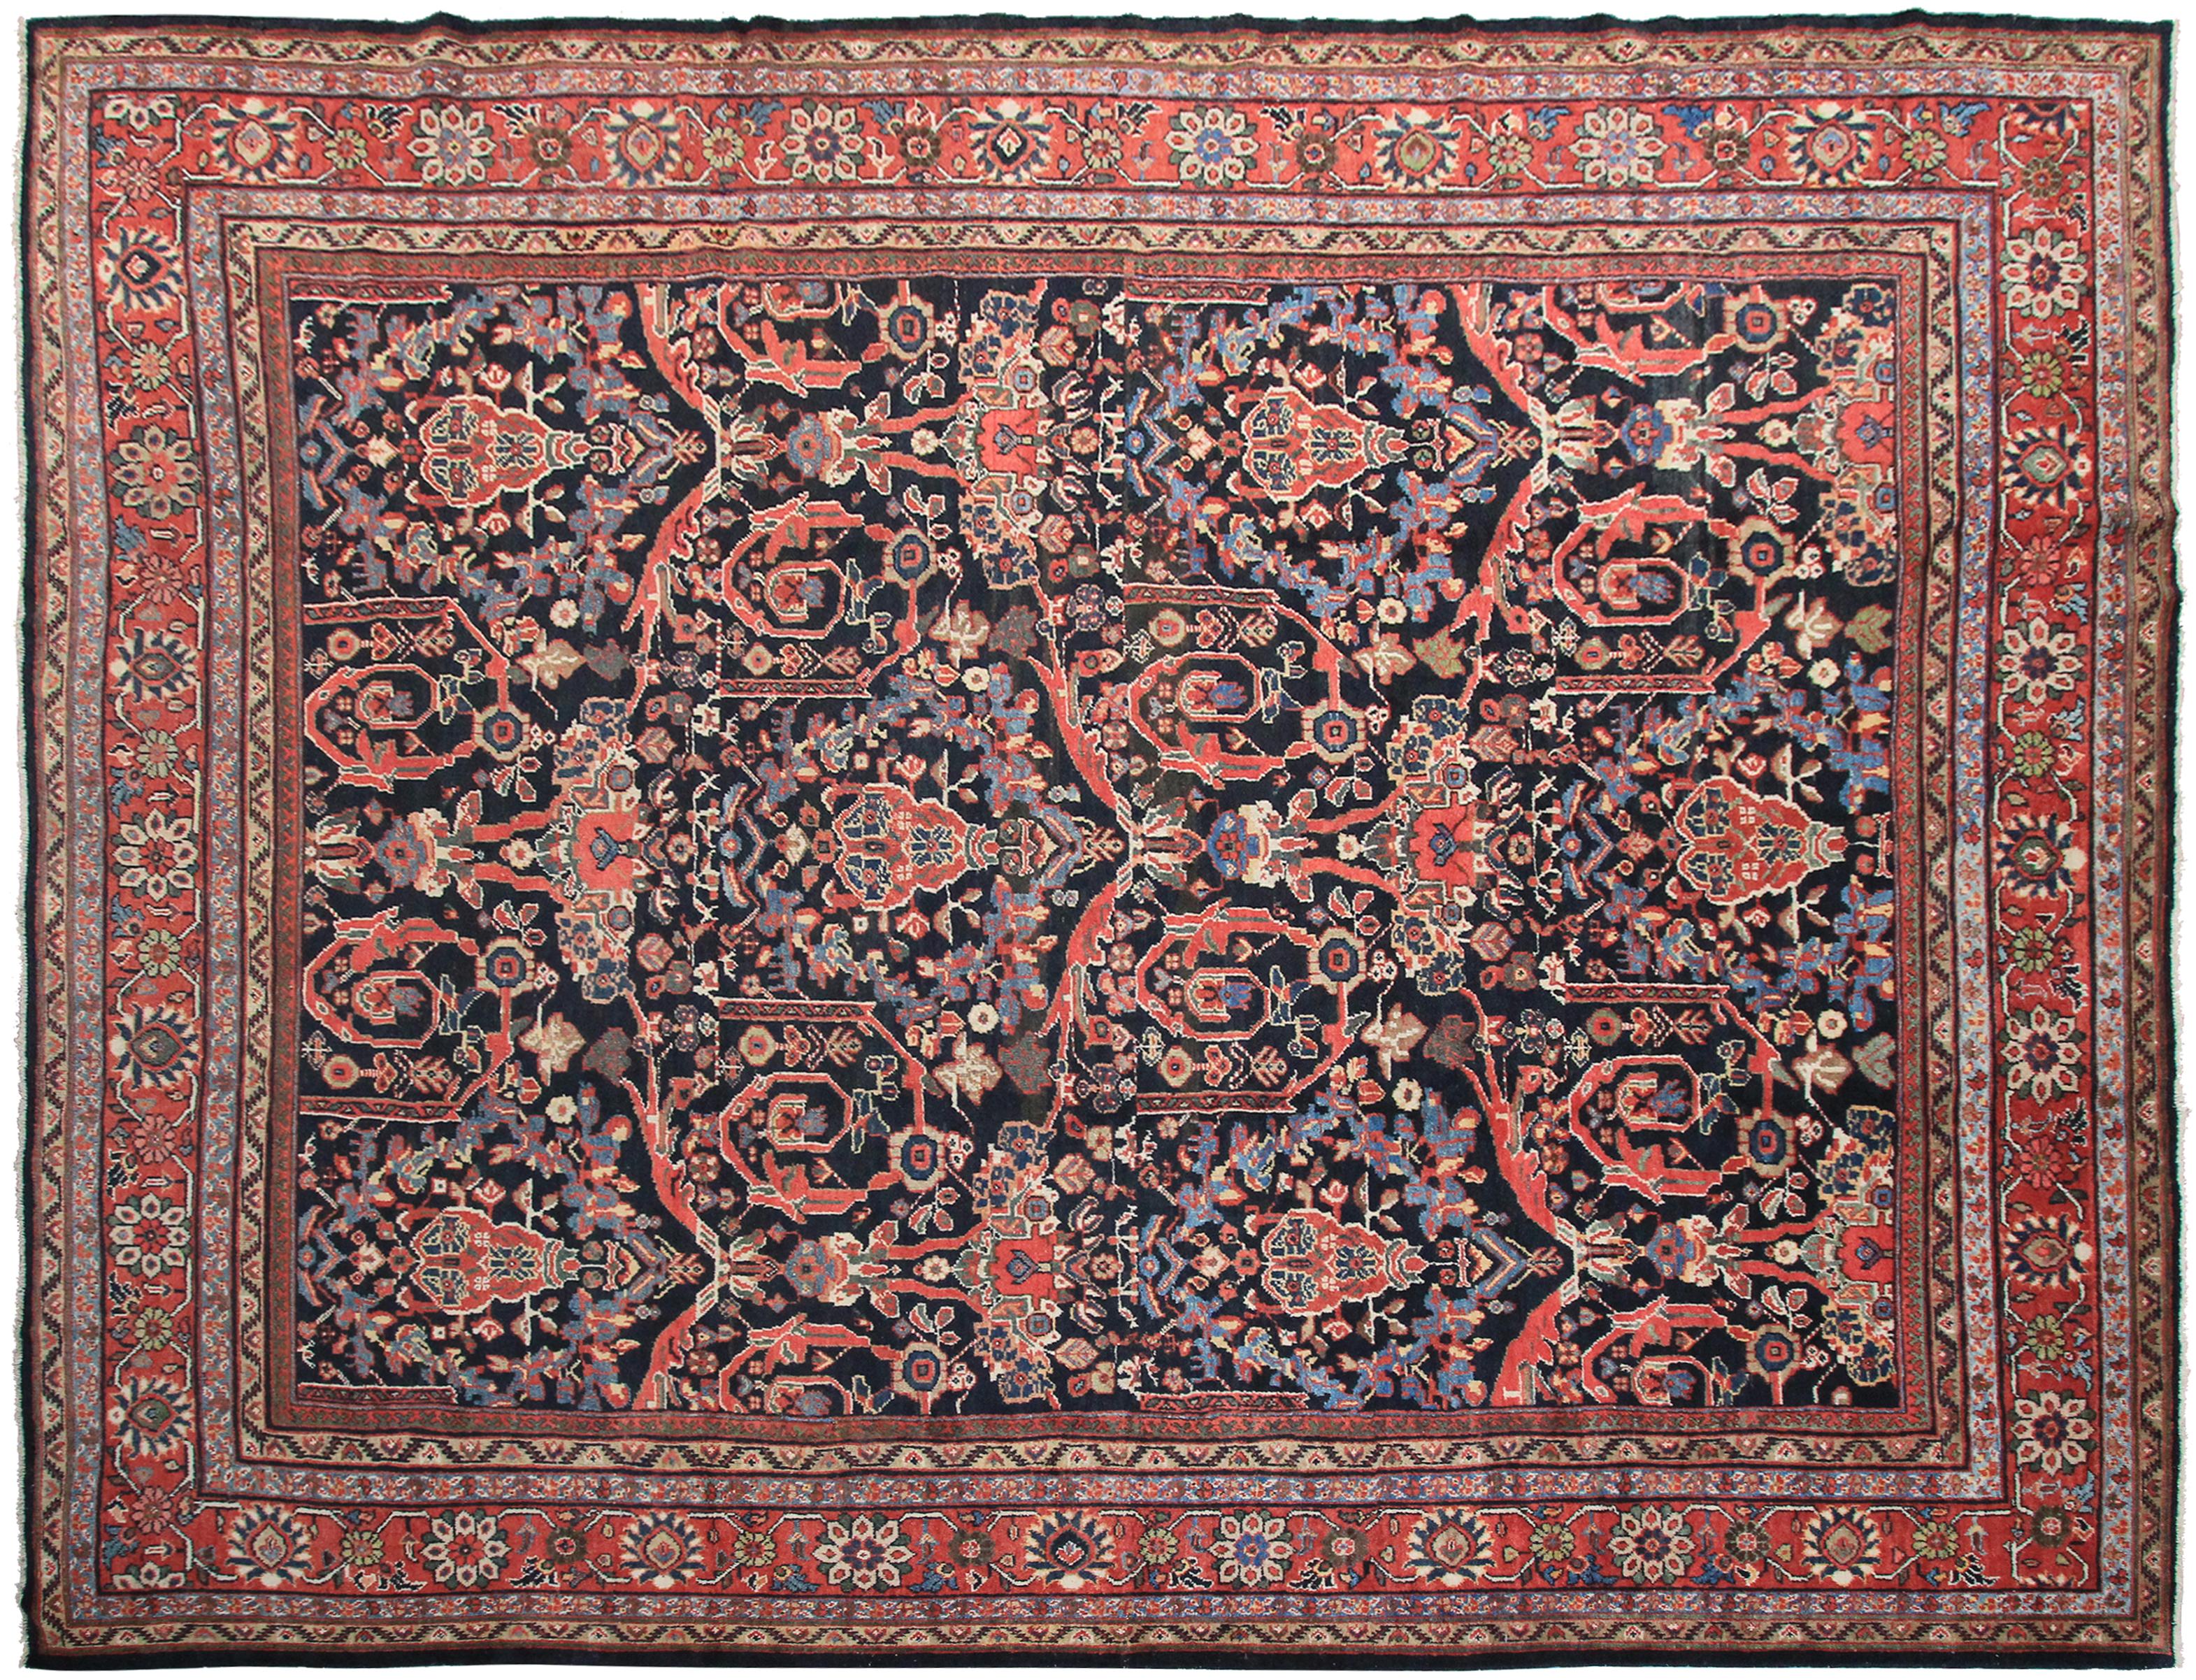 Antique Mahal rug Sultanabad handmade Carpet Arts & Crafts 10 X 13 312cm x 401cm Circa 1920

